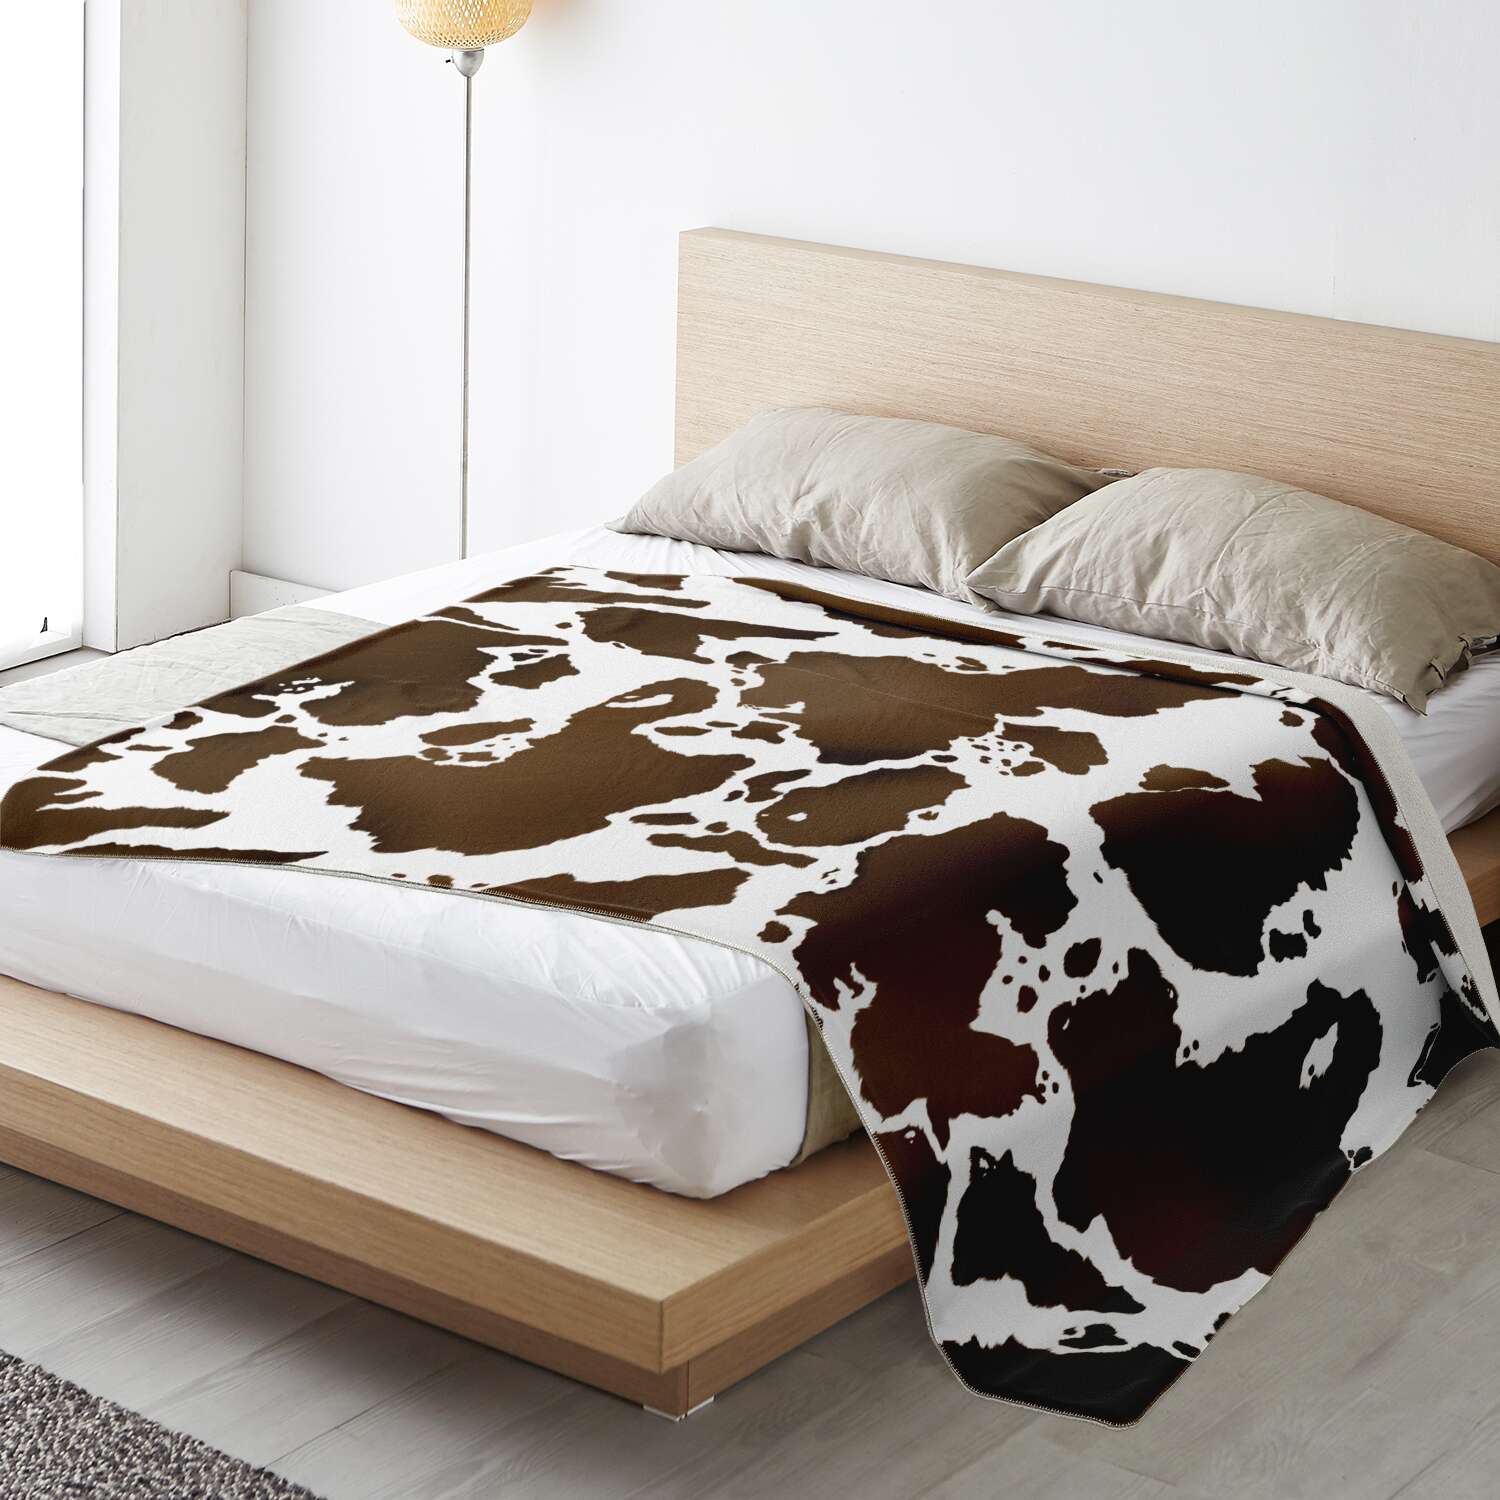 5bf555c2cd157ce07f65089c24acec51 blanket horizontal lifestyle - The Cow Print